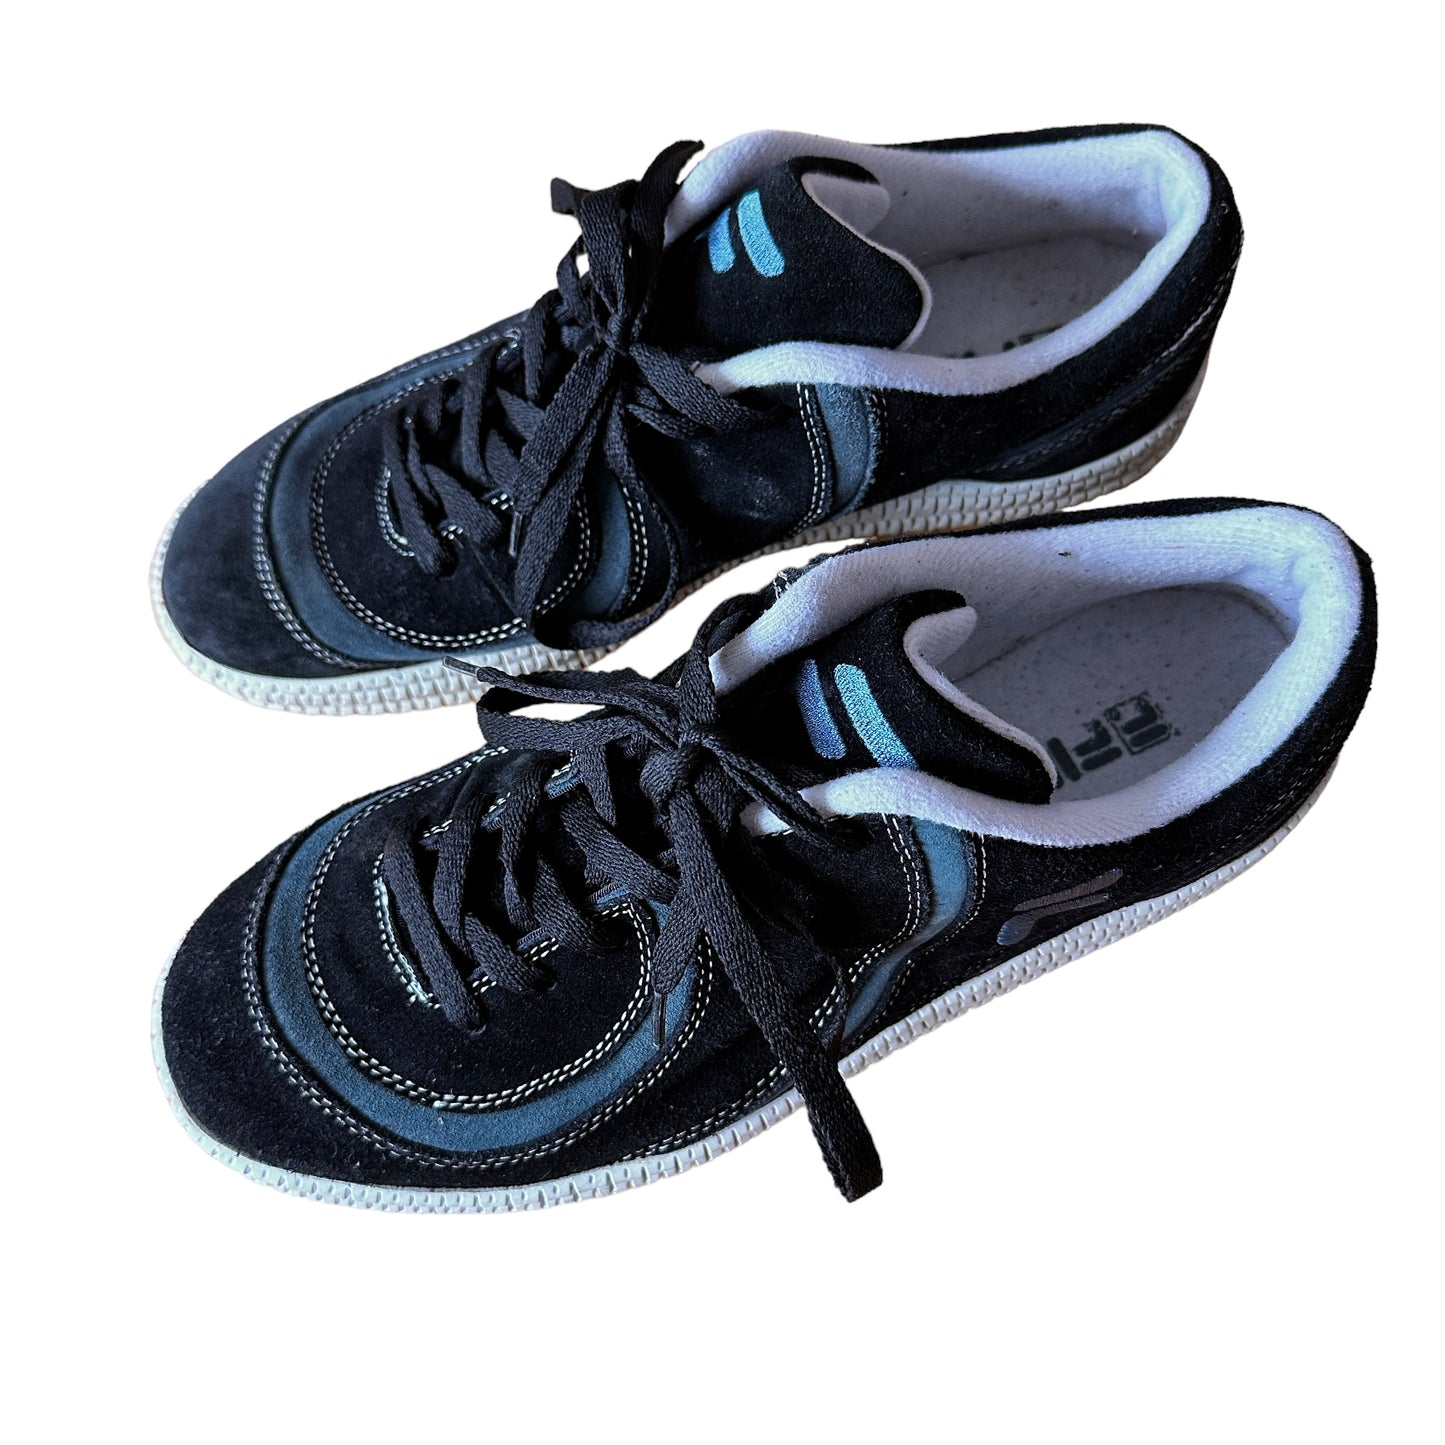 1997 Fila skate shoes sz10